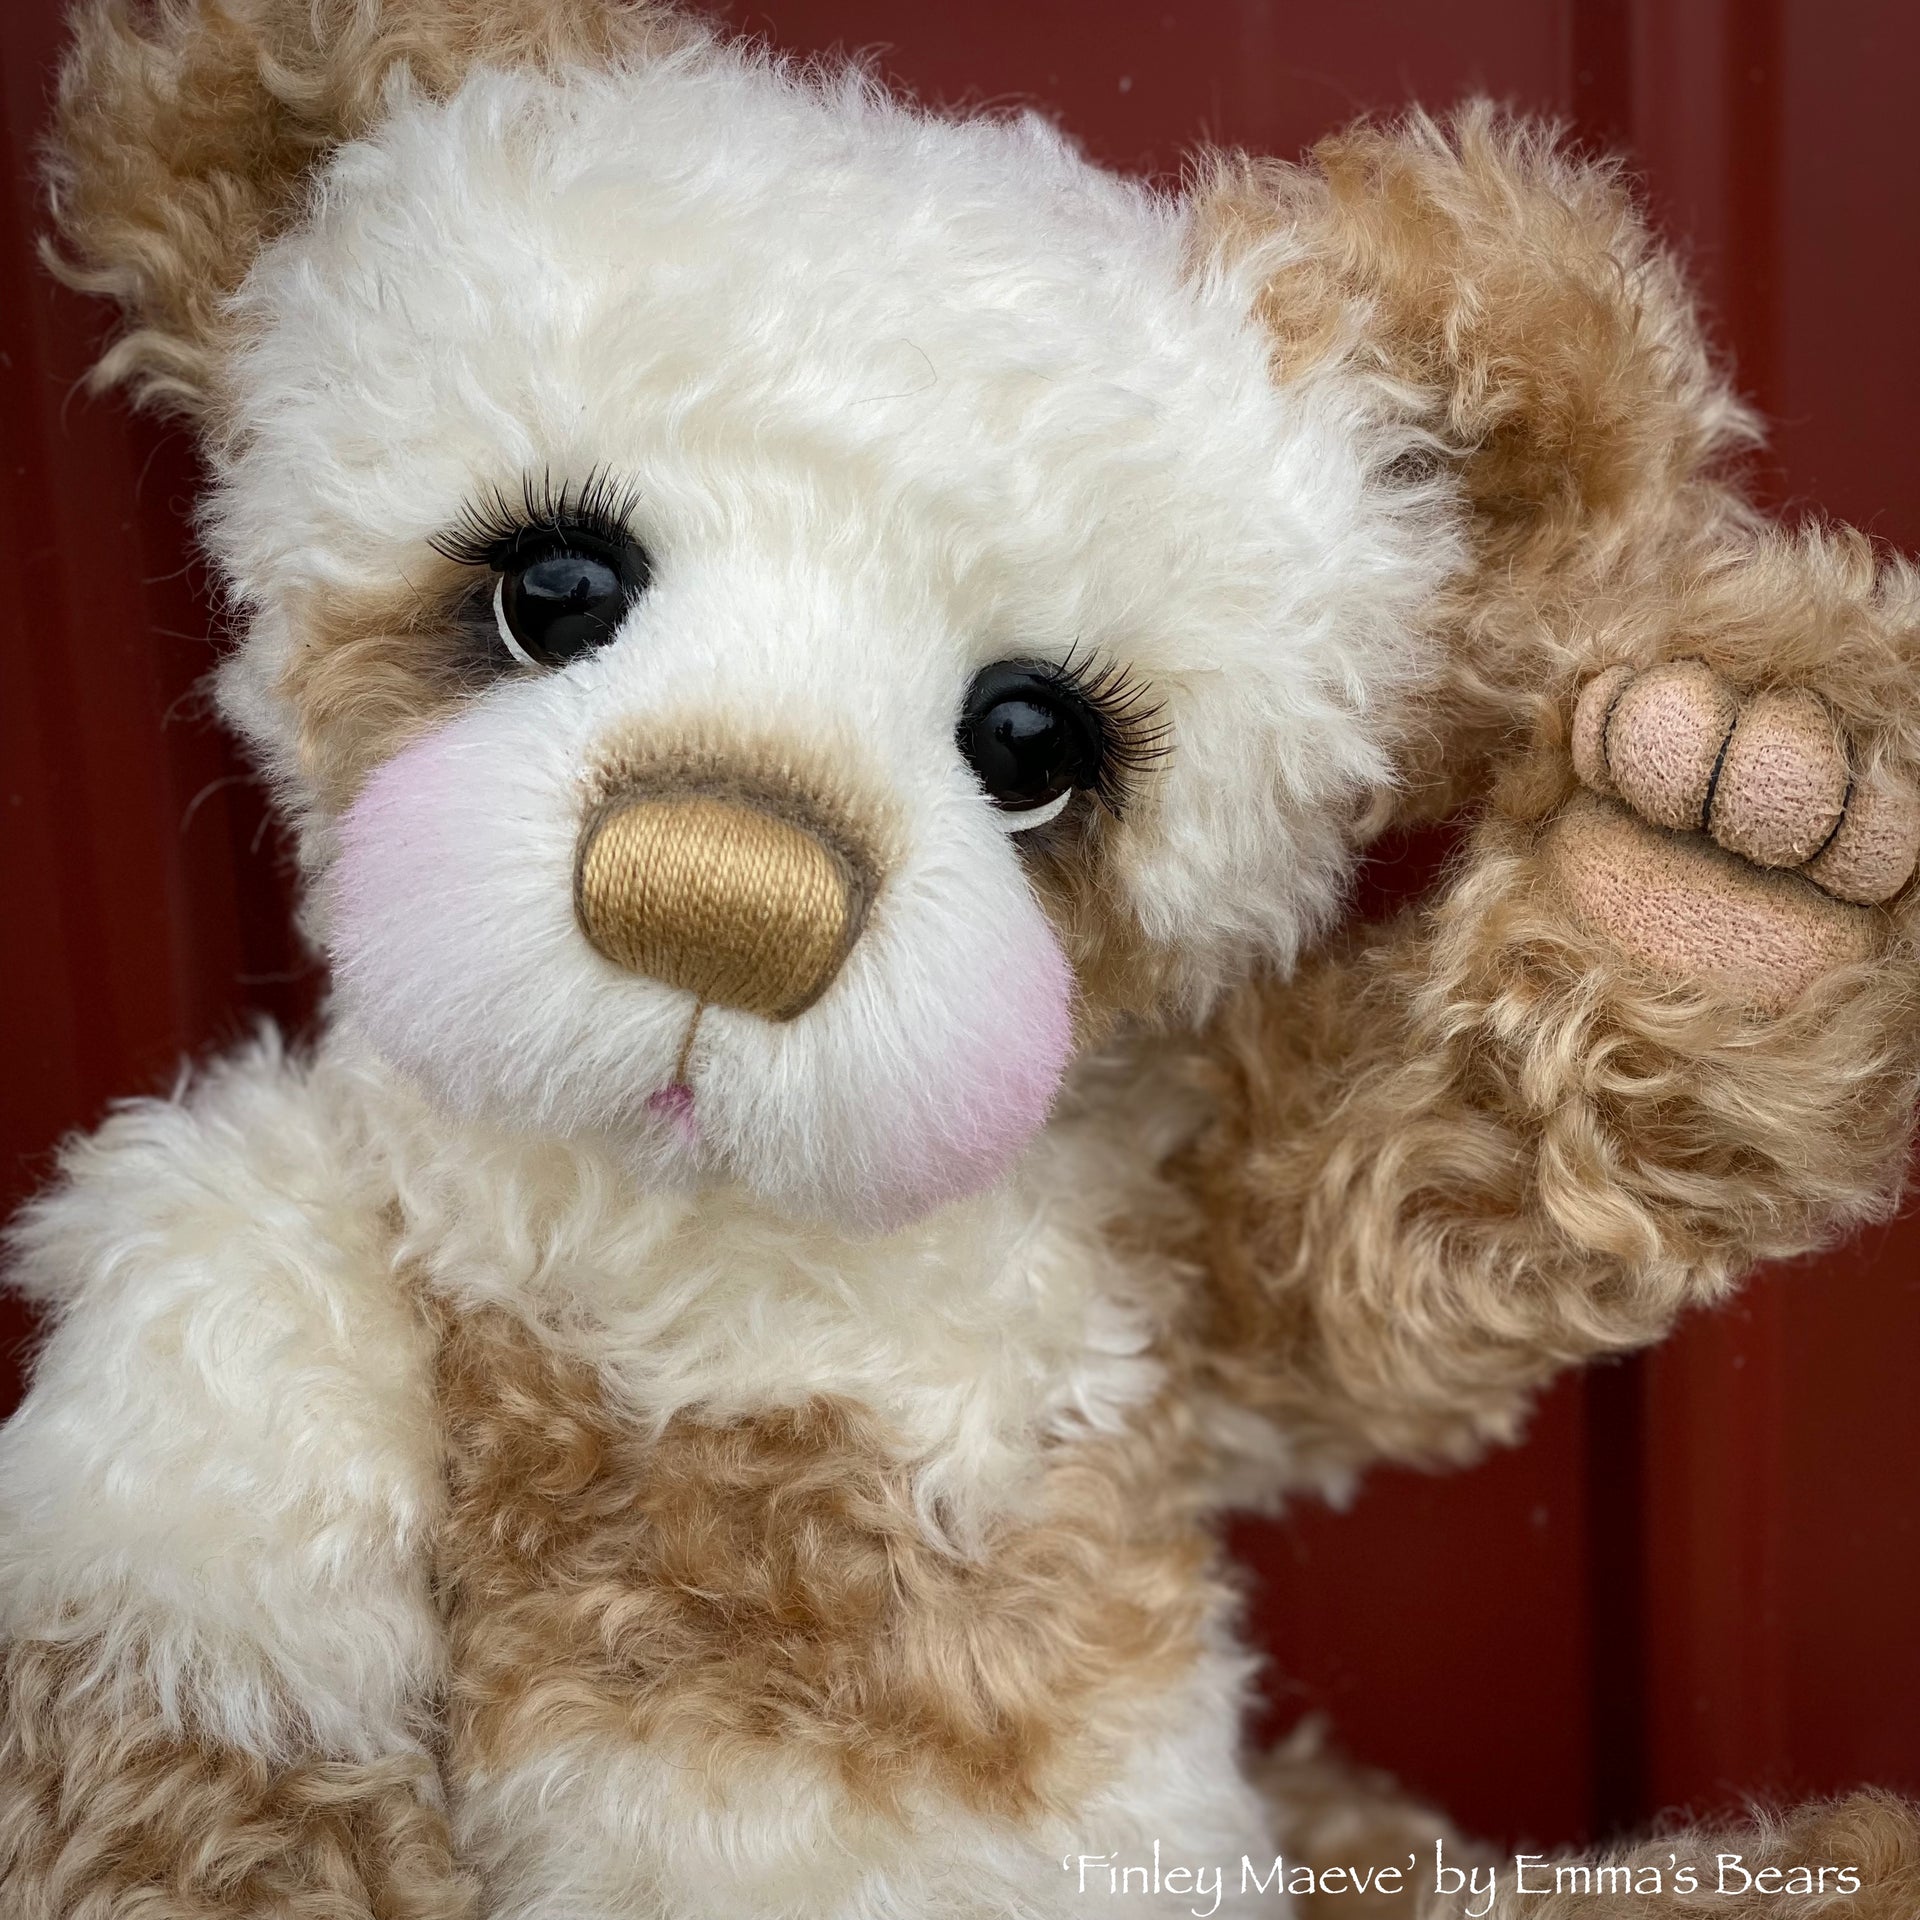 Finley Maeve - 17" Mohair Artist Baby Bear by Emma's Bears - OOAK